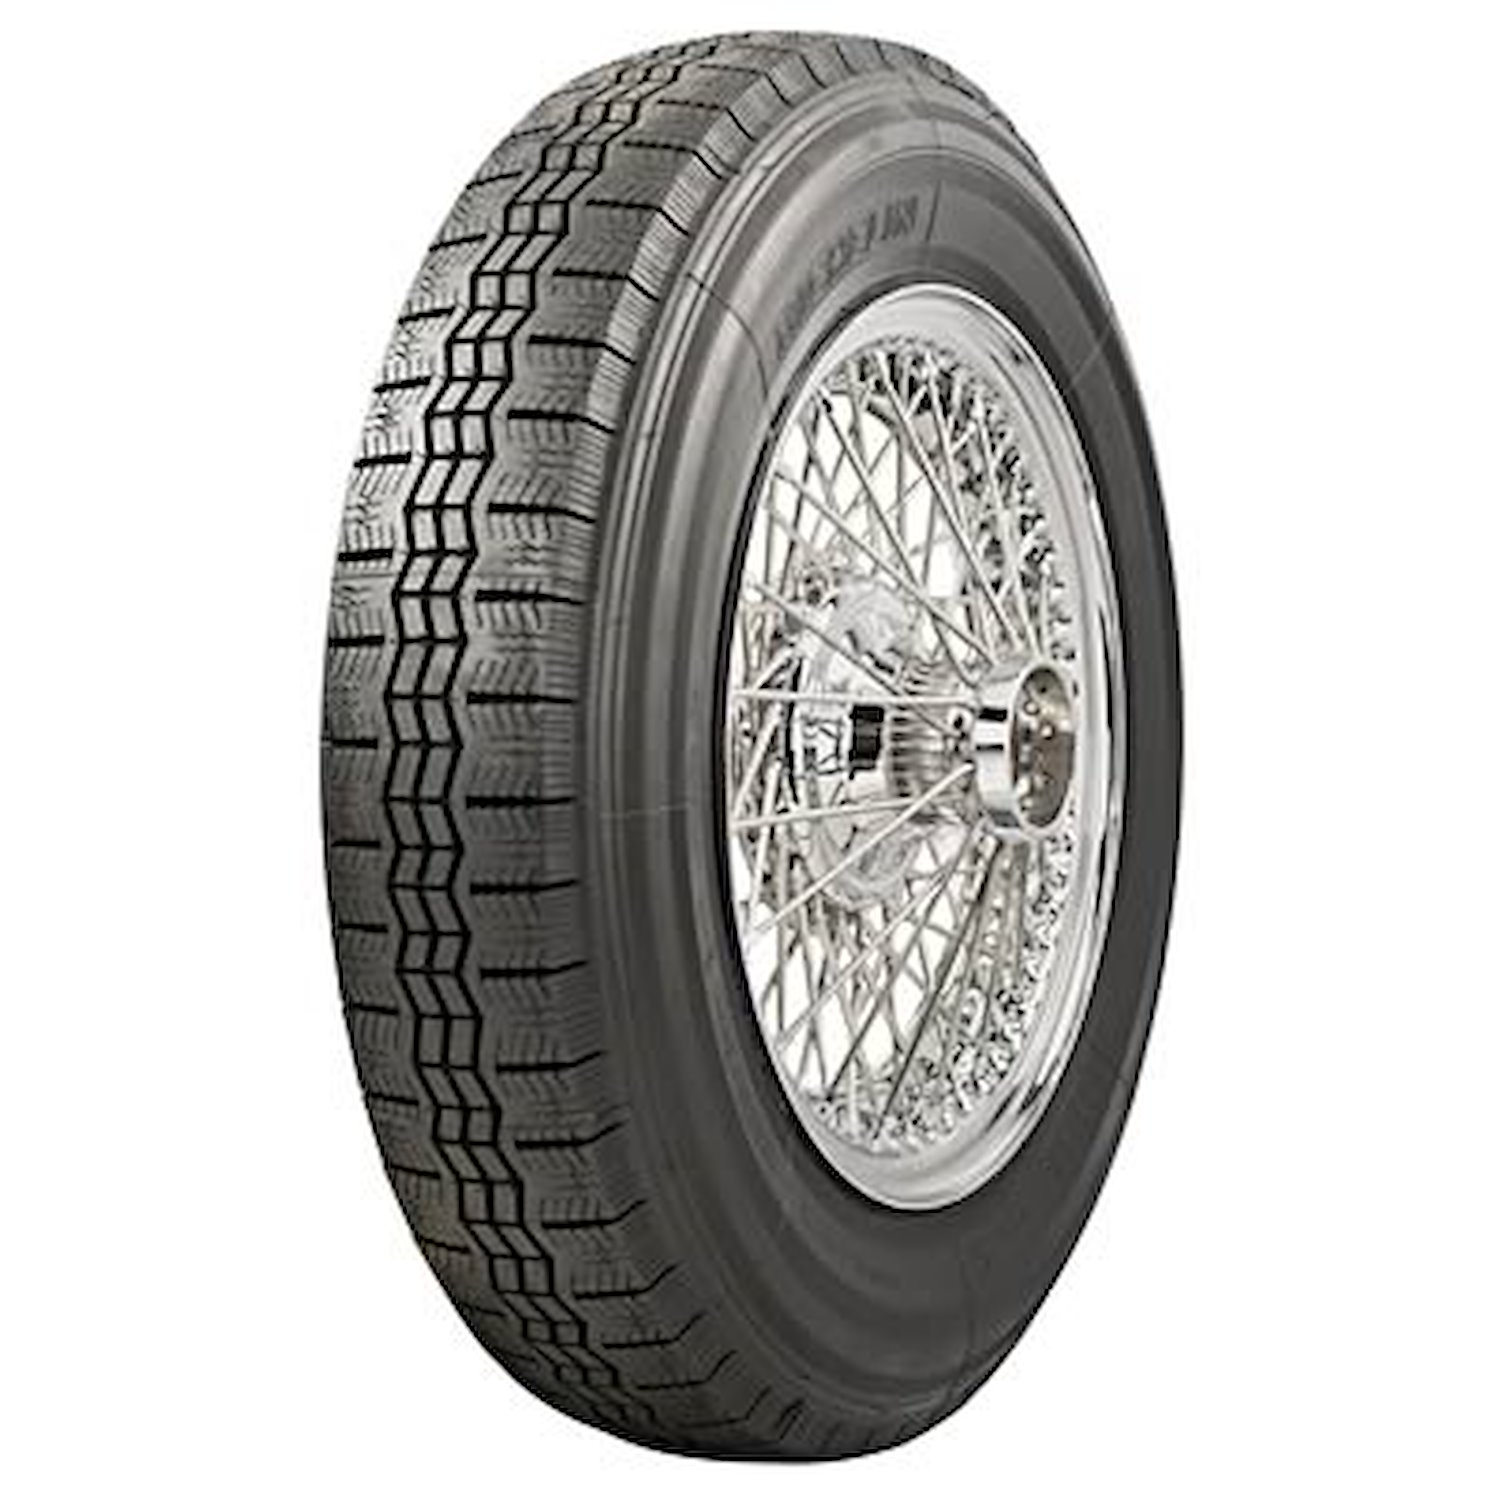 64311 Tire, Michelin X Radial, 550R16 84H